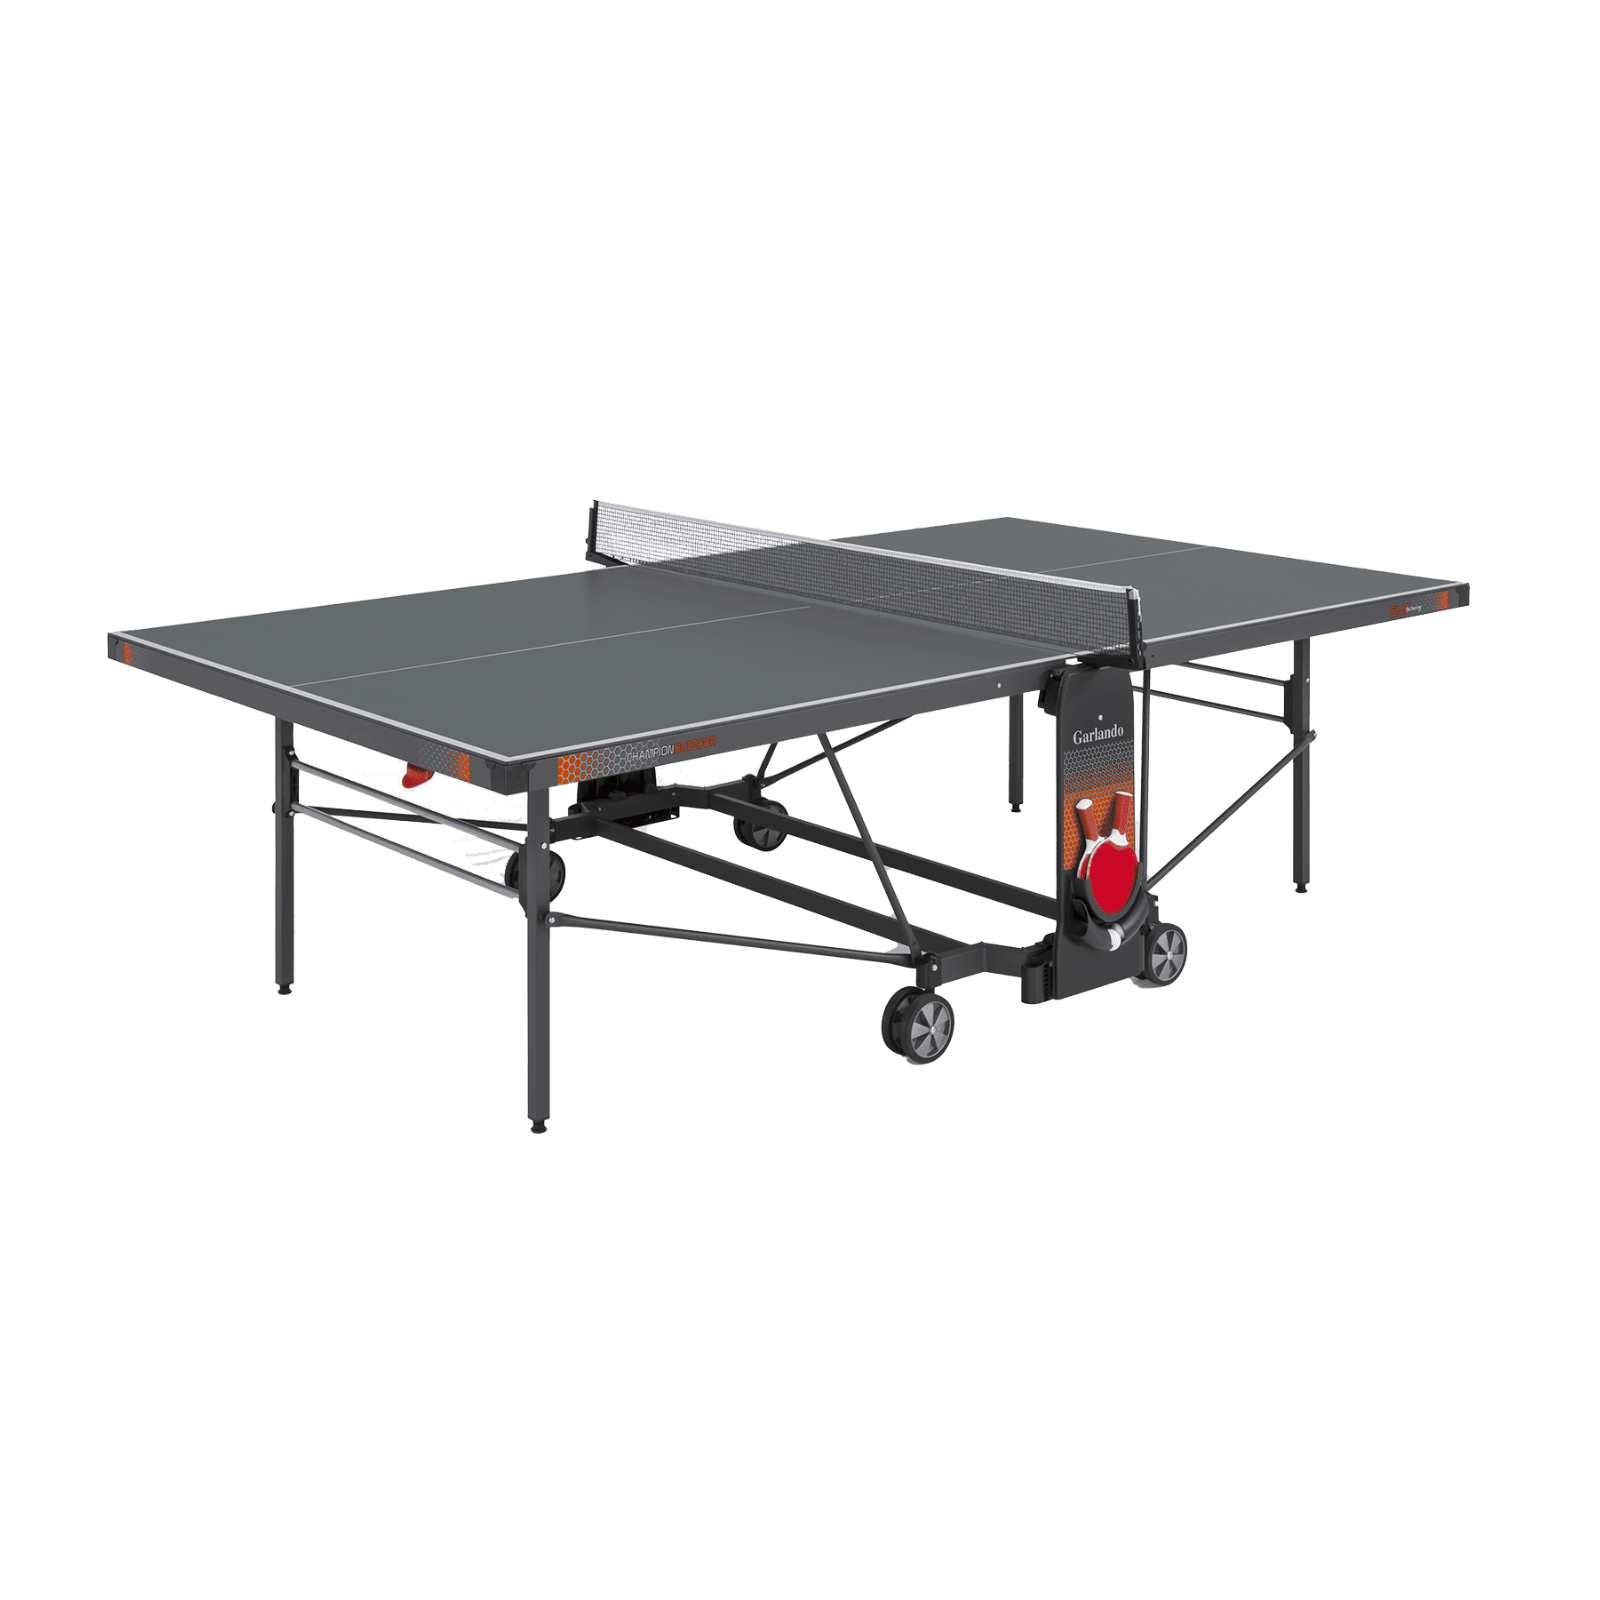 Champion Outdoor Grigio - Tavolo Ping Pong Pieghevole con Sistema Ergonomico ECS - Finitura Antiriflesso